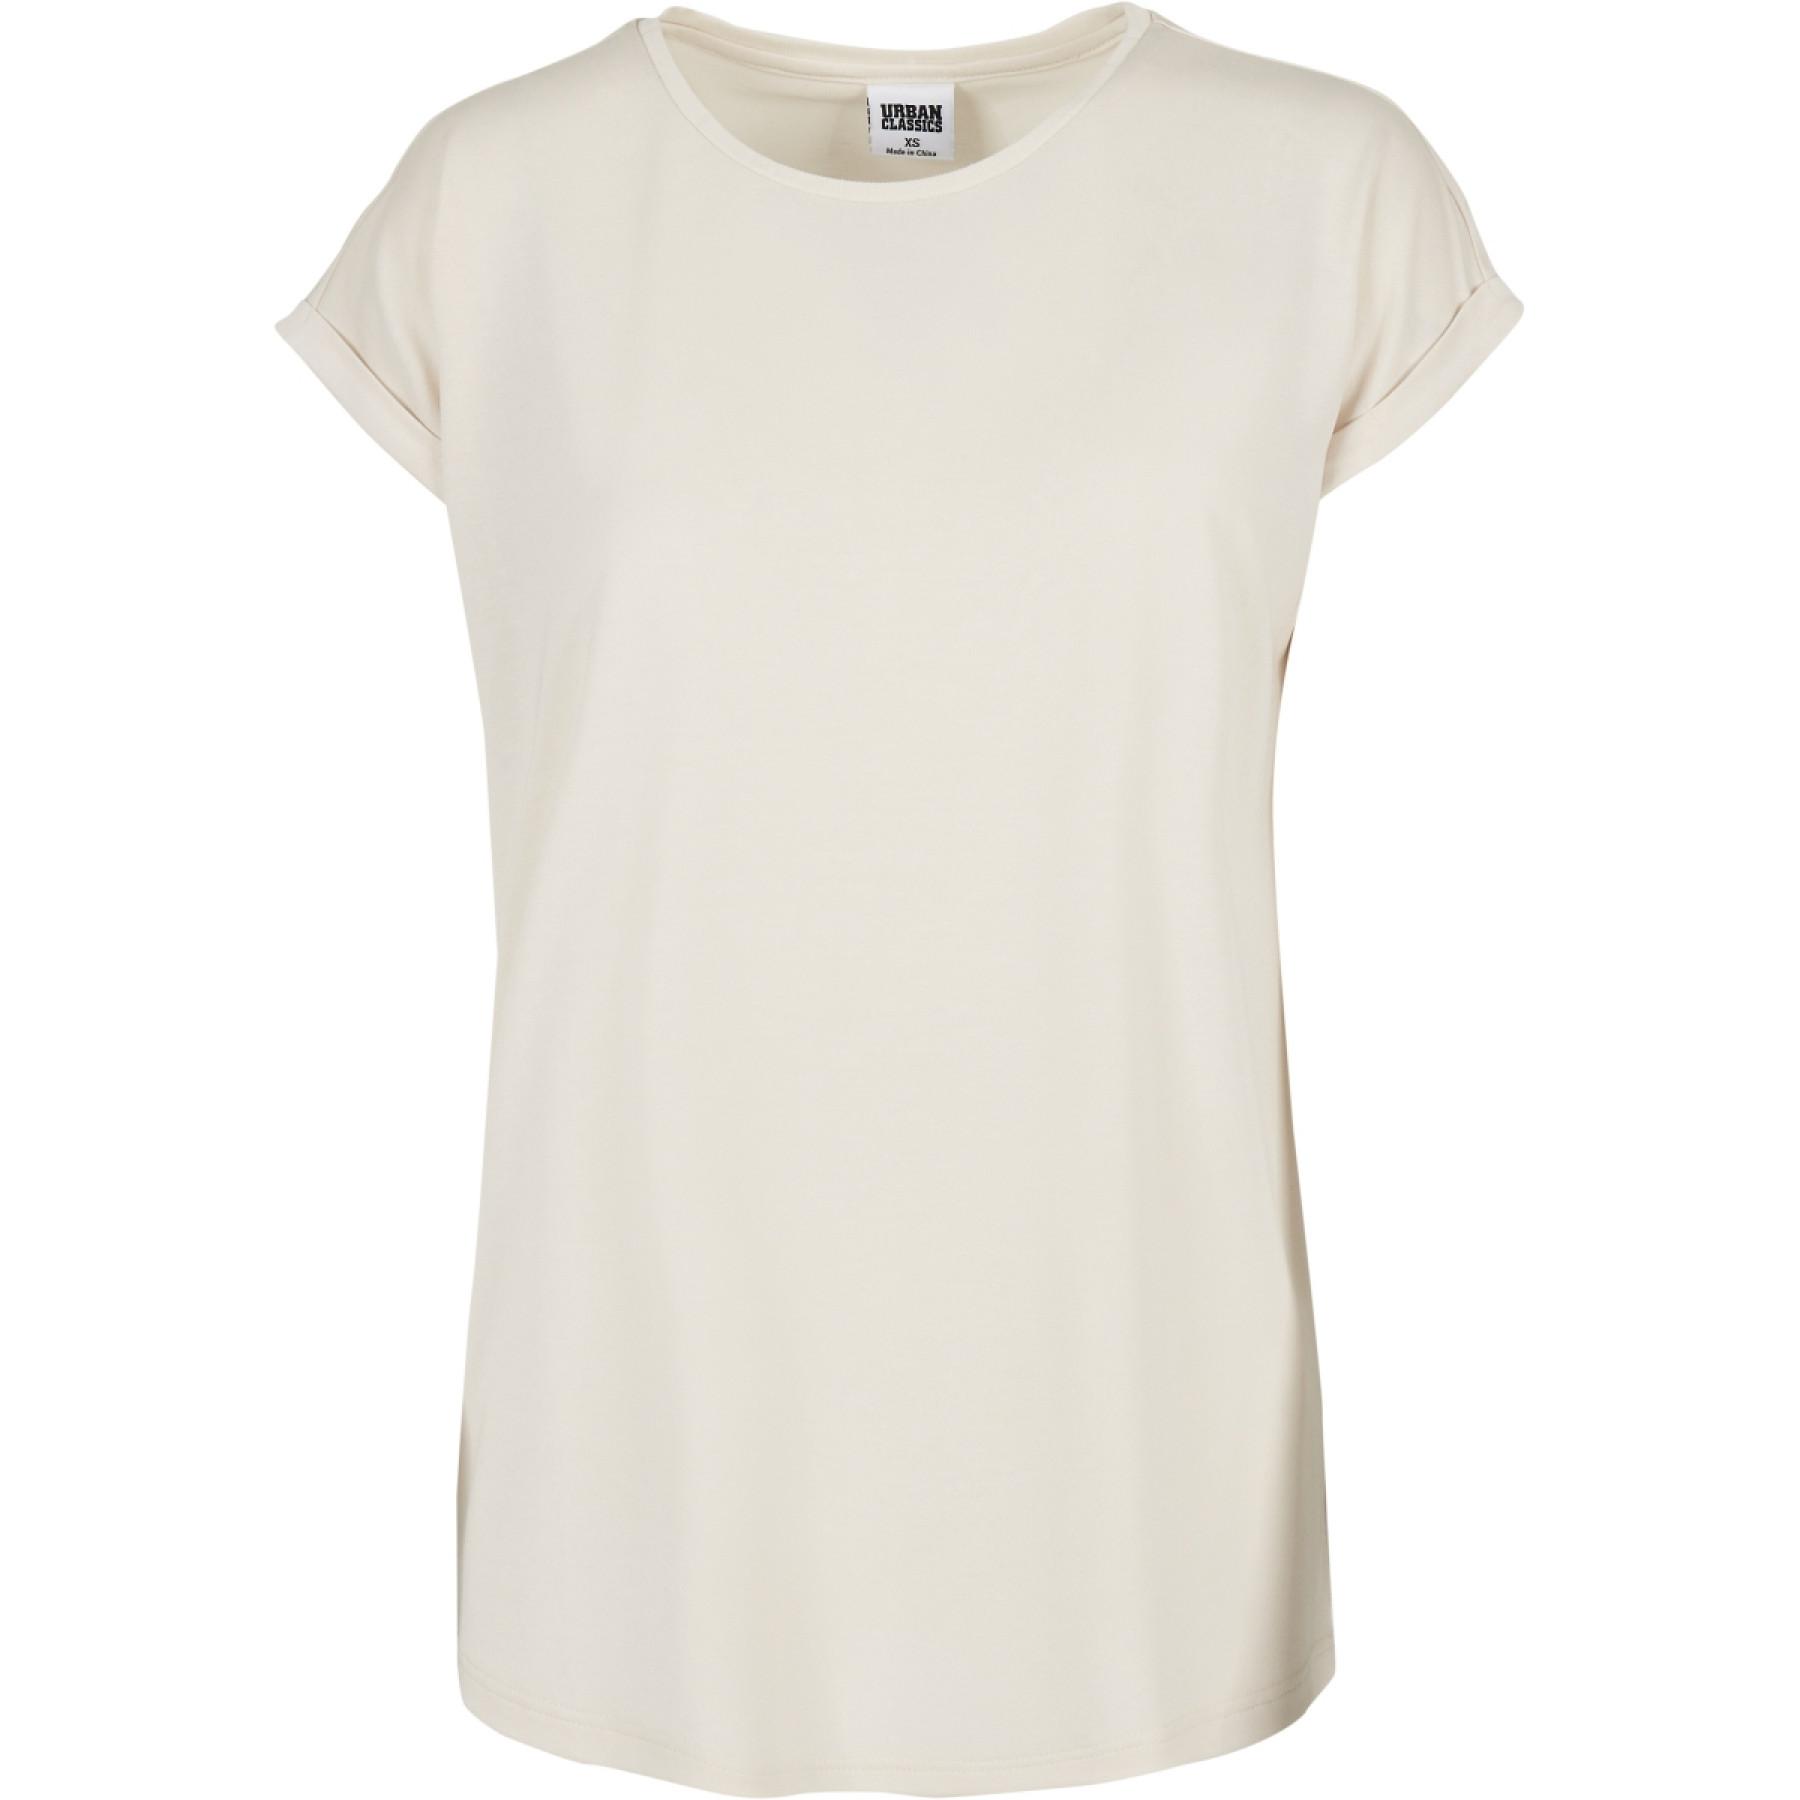 Dames-T-shirt Urban Classics modal extended shoulder-grandes tailles